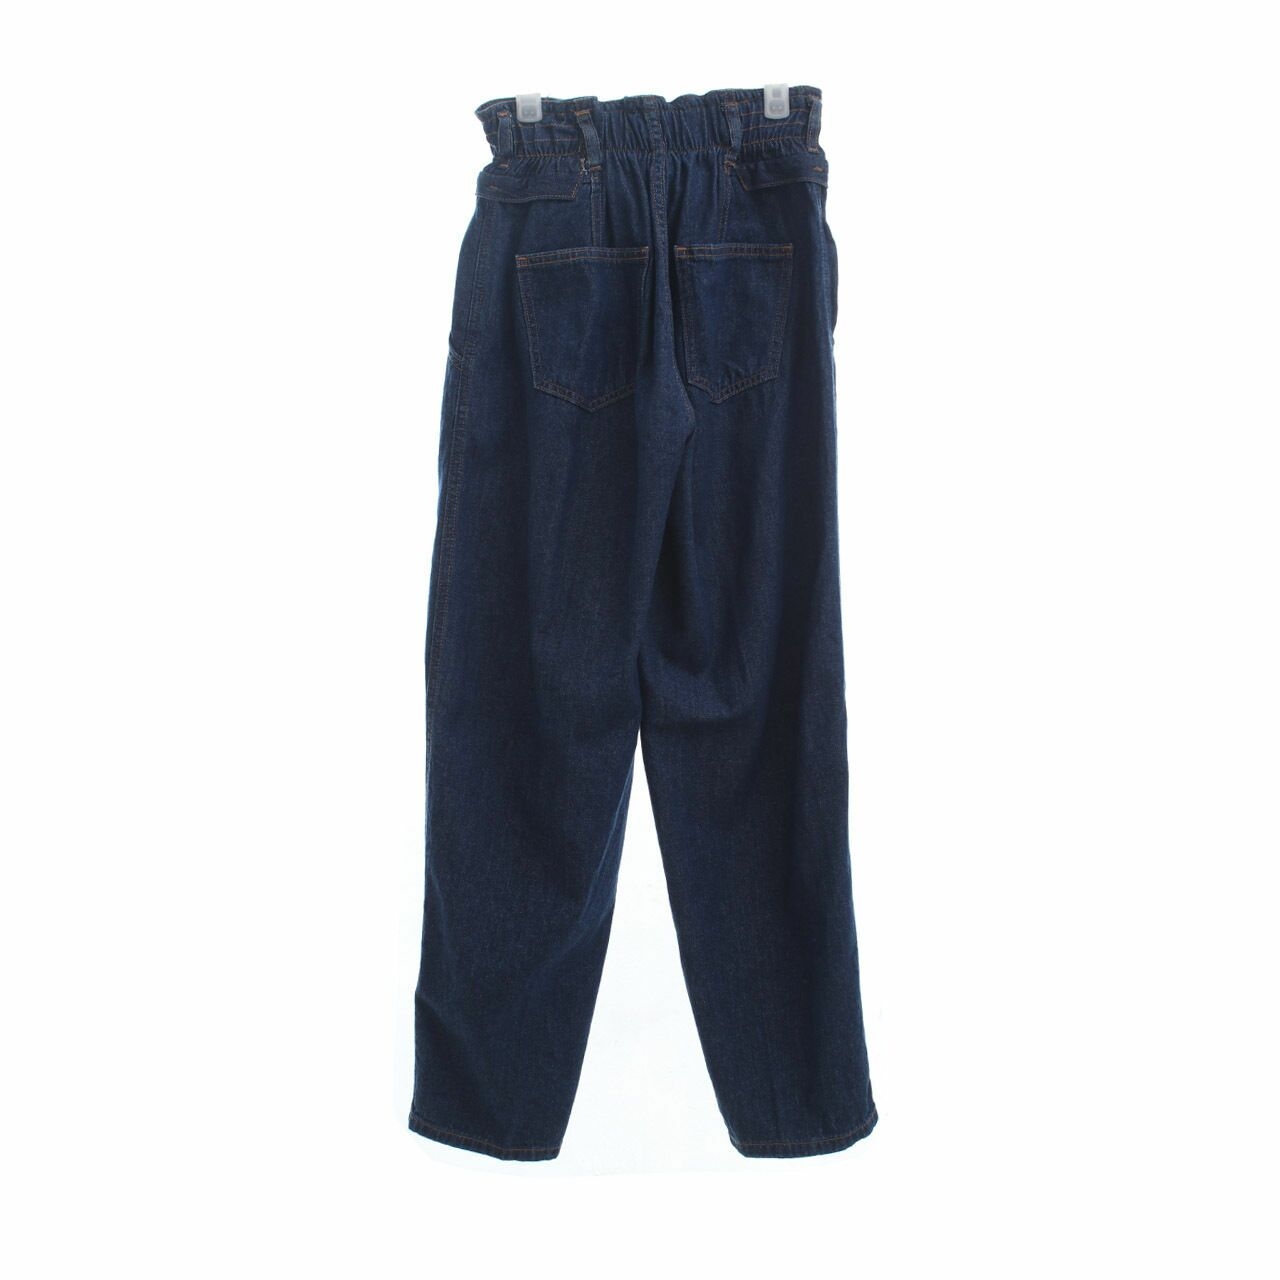 Zara Dark Blue Denim Long Pants